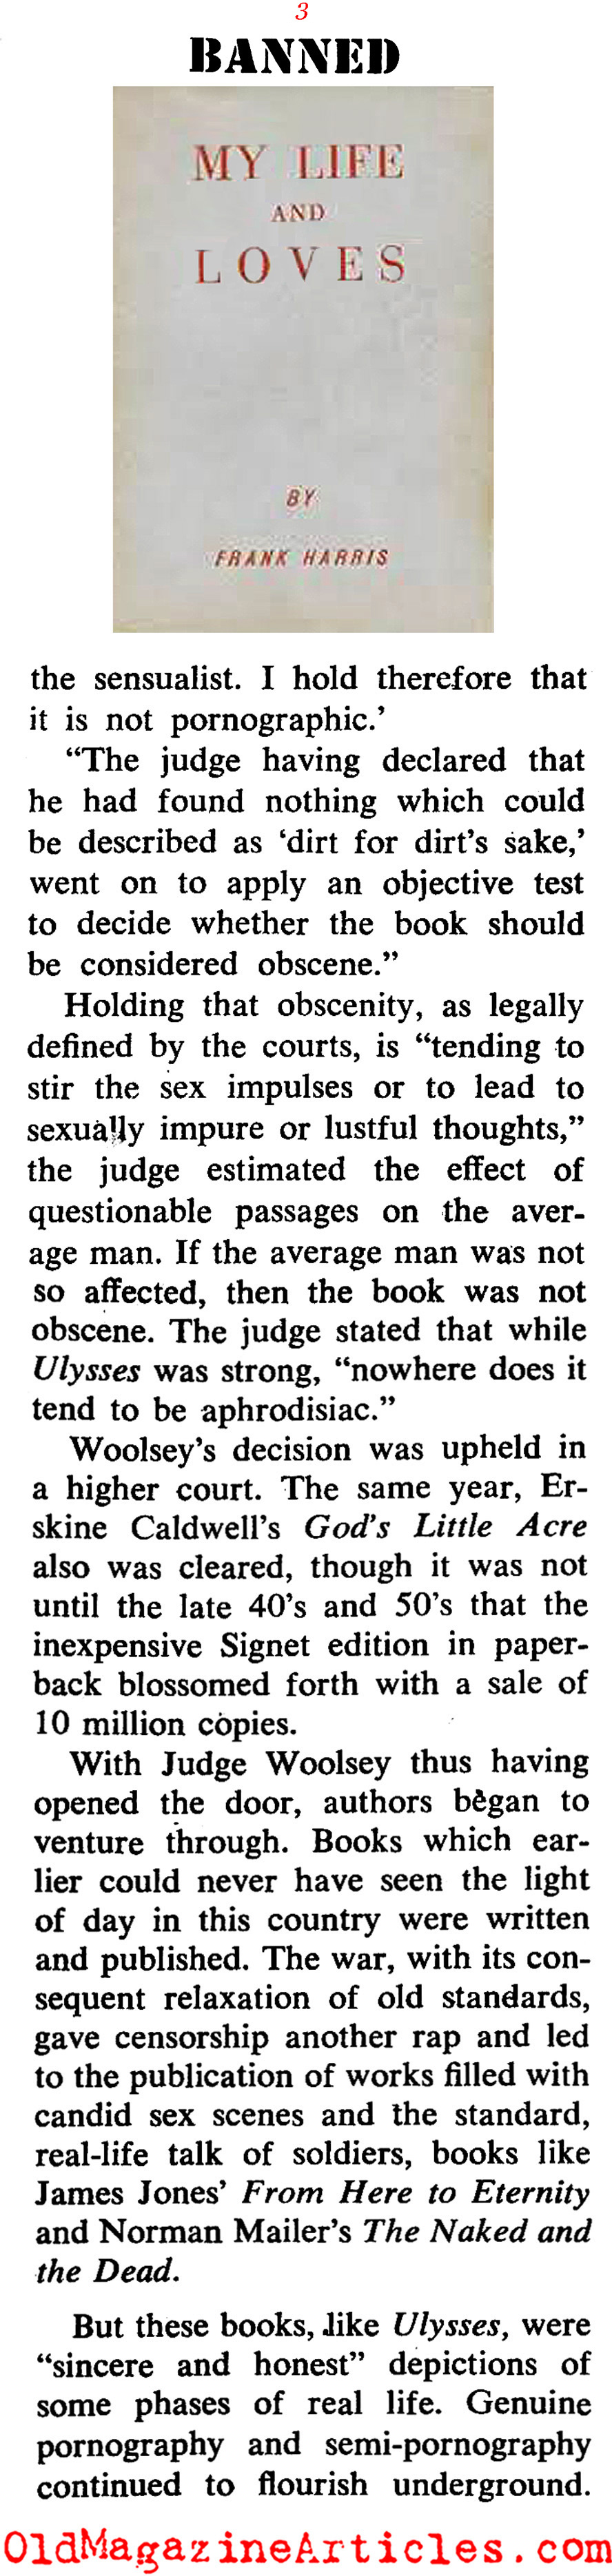 Banned Book$ (Coronet Magazine, 1964)